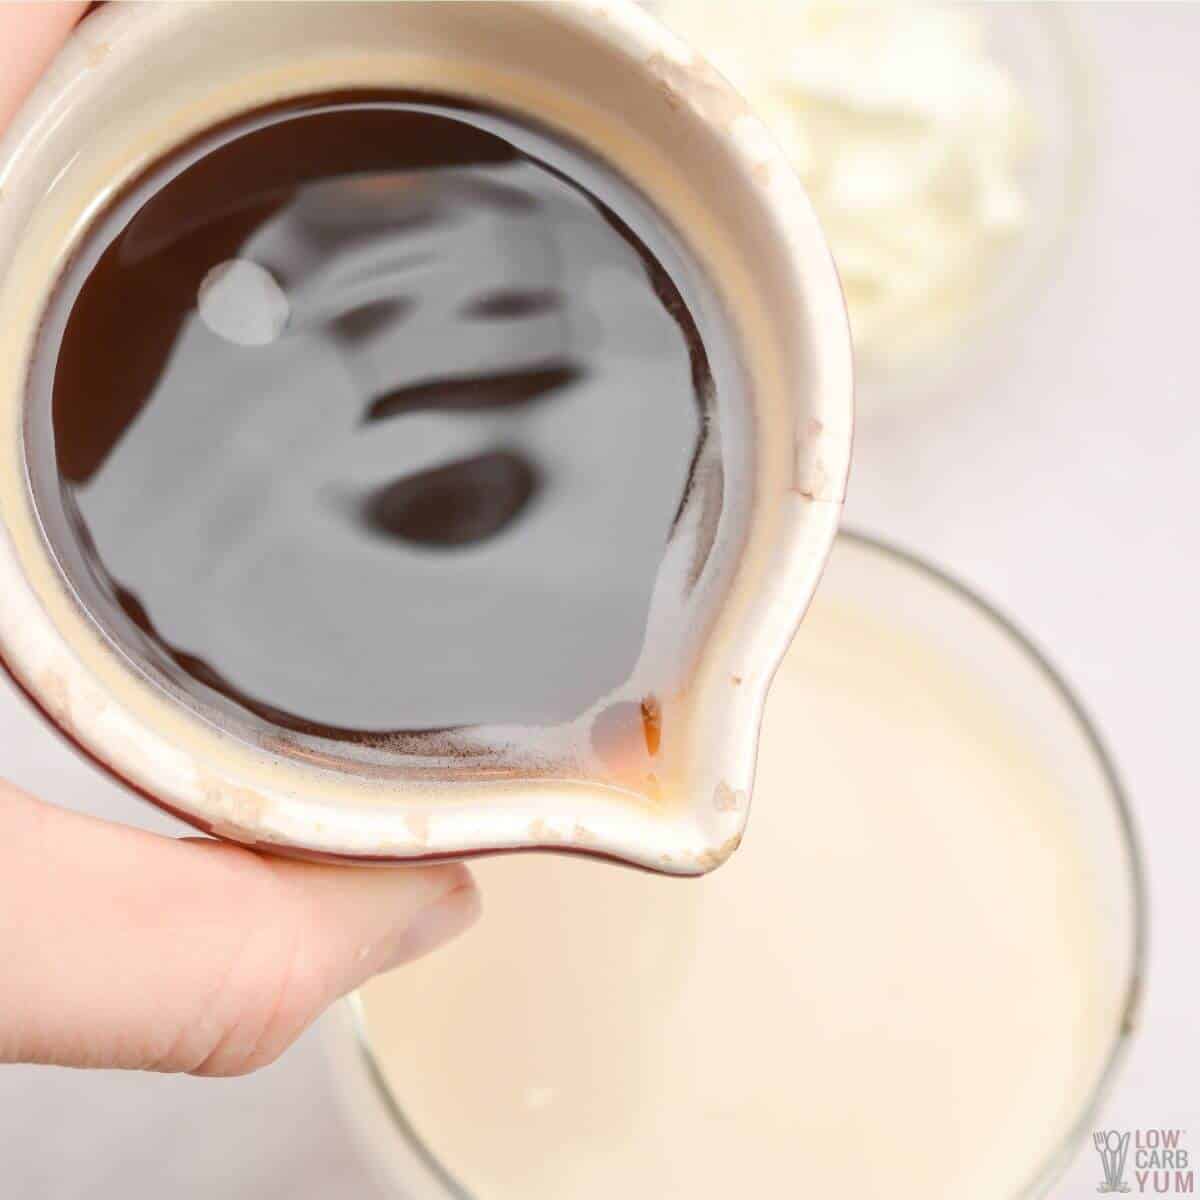 addin espresso shot to hot milk.